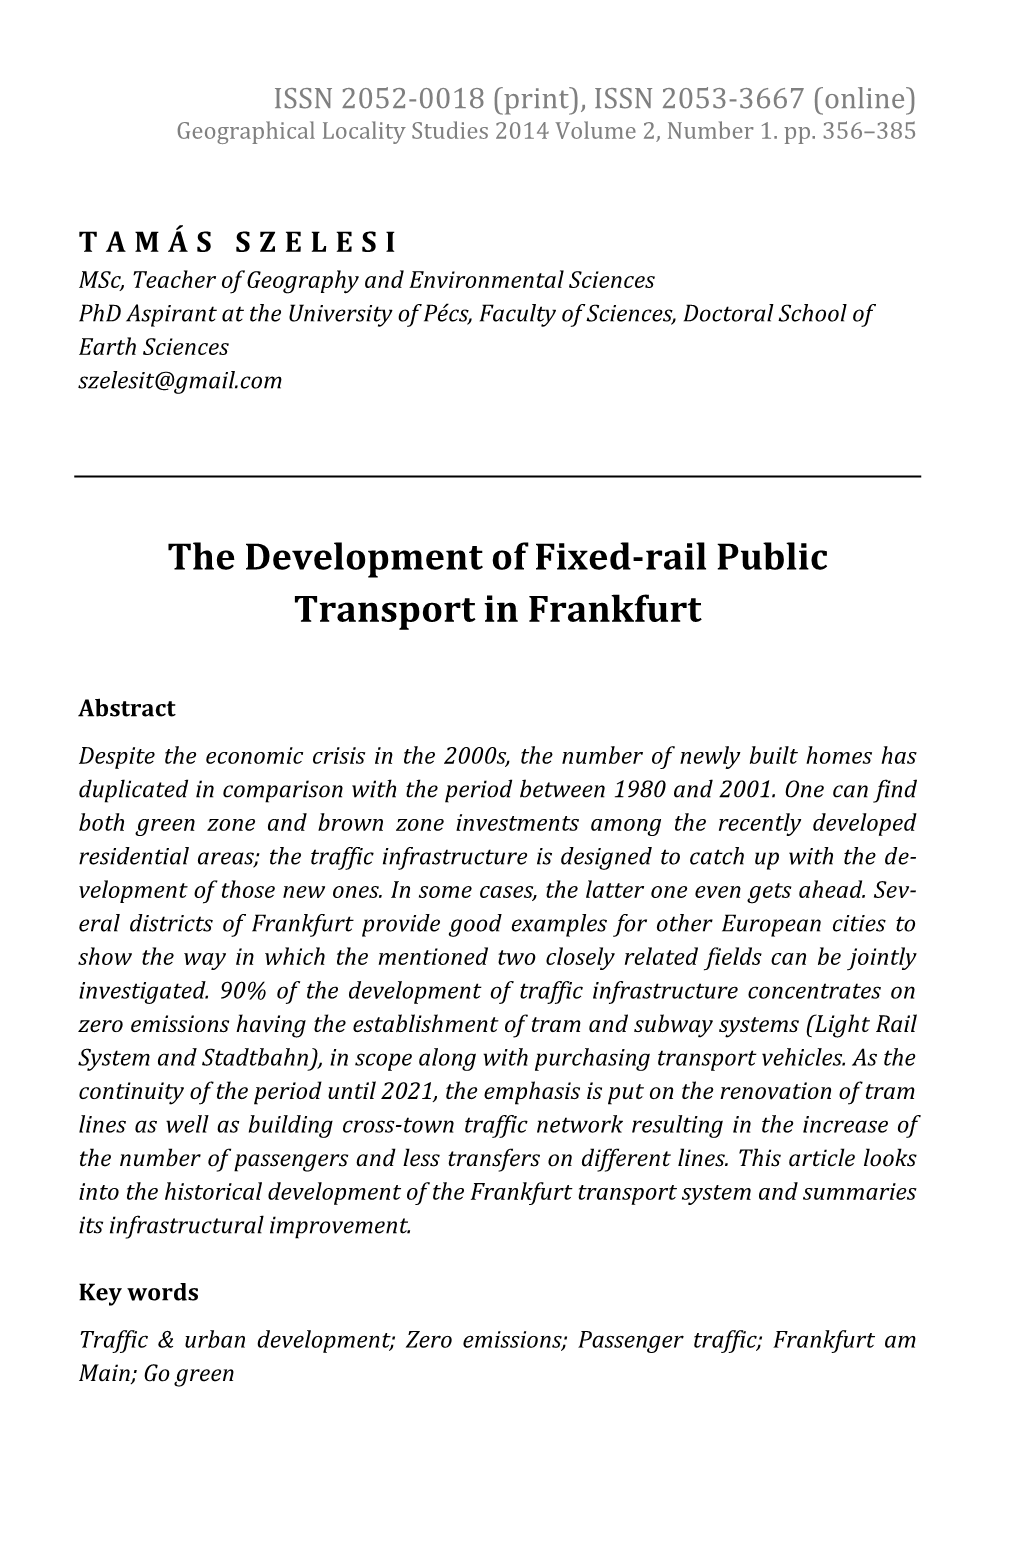 The Development of Fixed-Rail Public Transport in Frankfurt